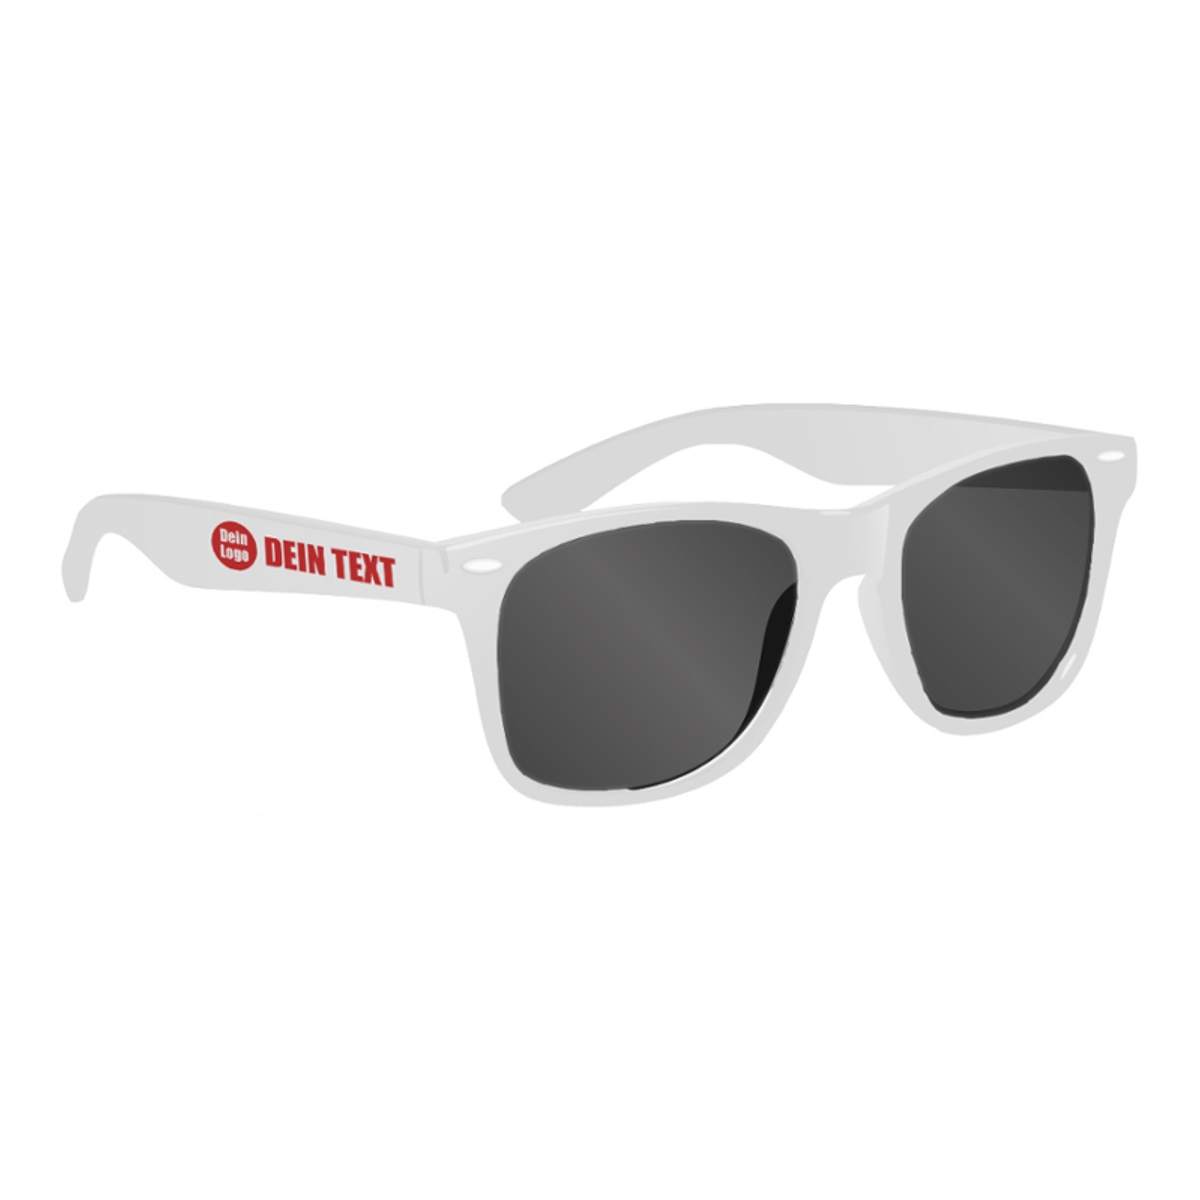 Sonnenbrillen | Farbe: weiß, individuell bedruckt